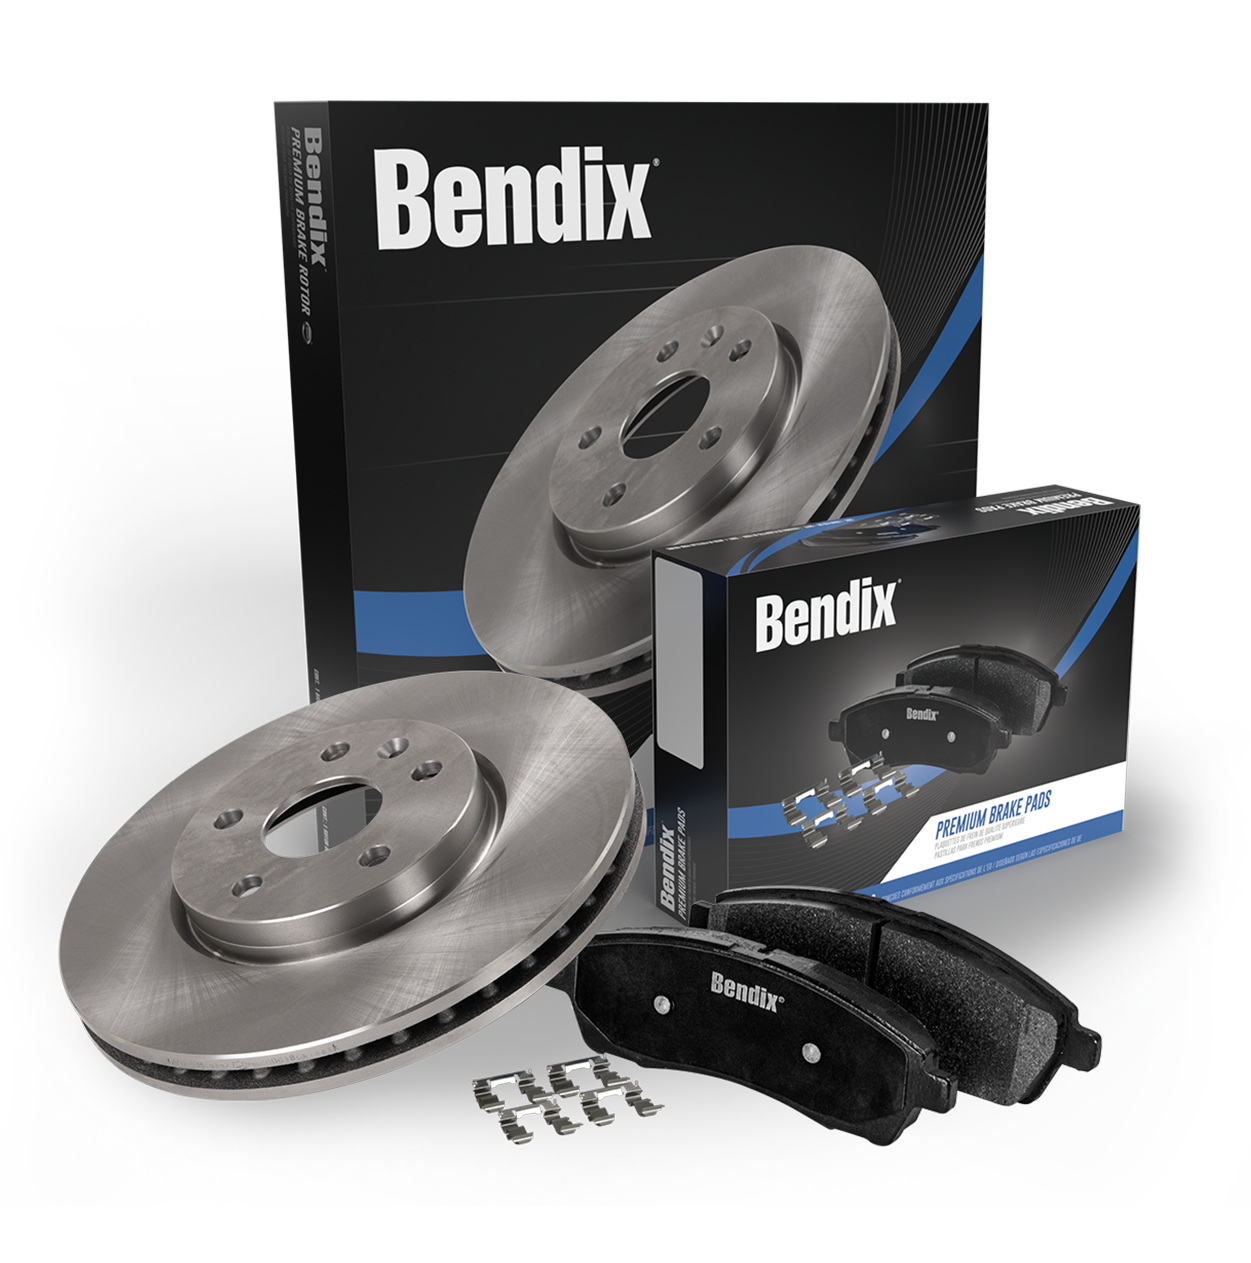 Bendix Premium Copper Free CFC576 Premium Copper Free Ceramic Brake Pad with Installation Hardware Front 